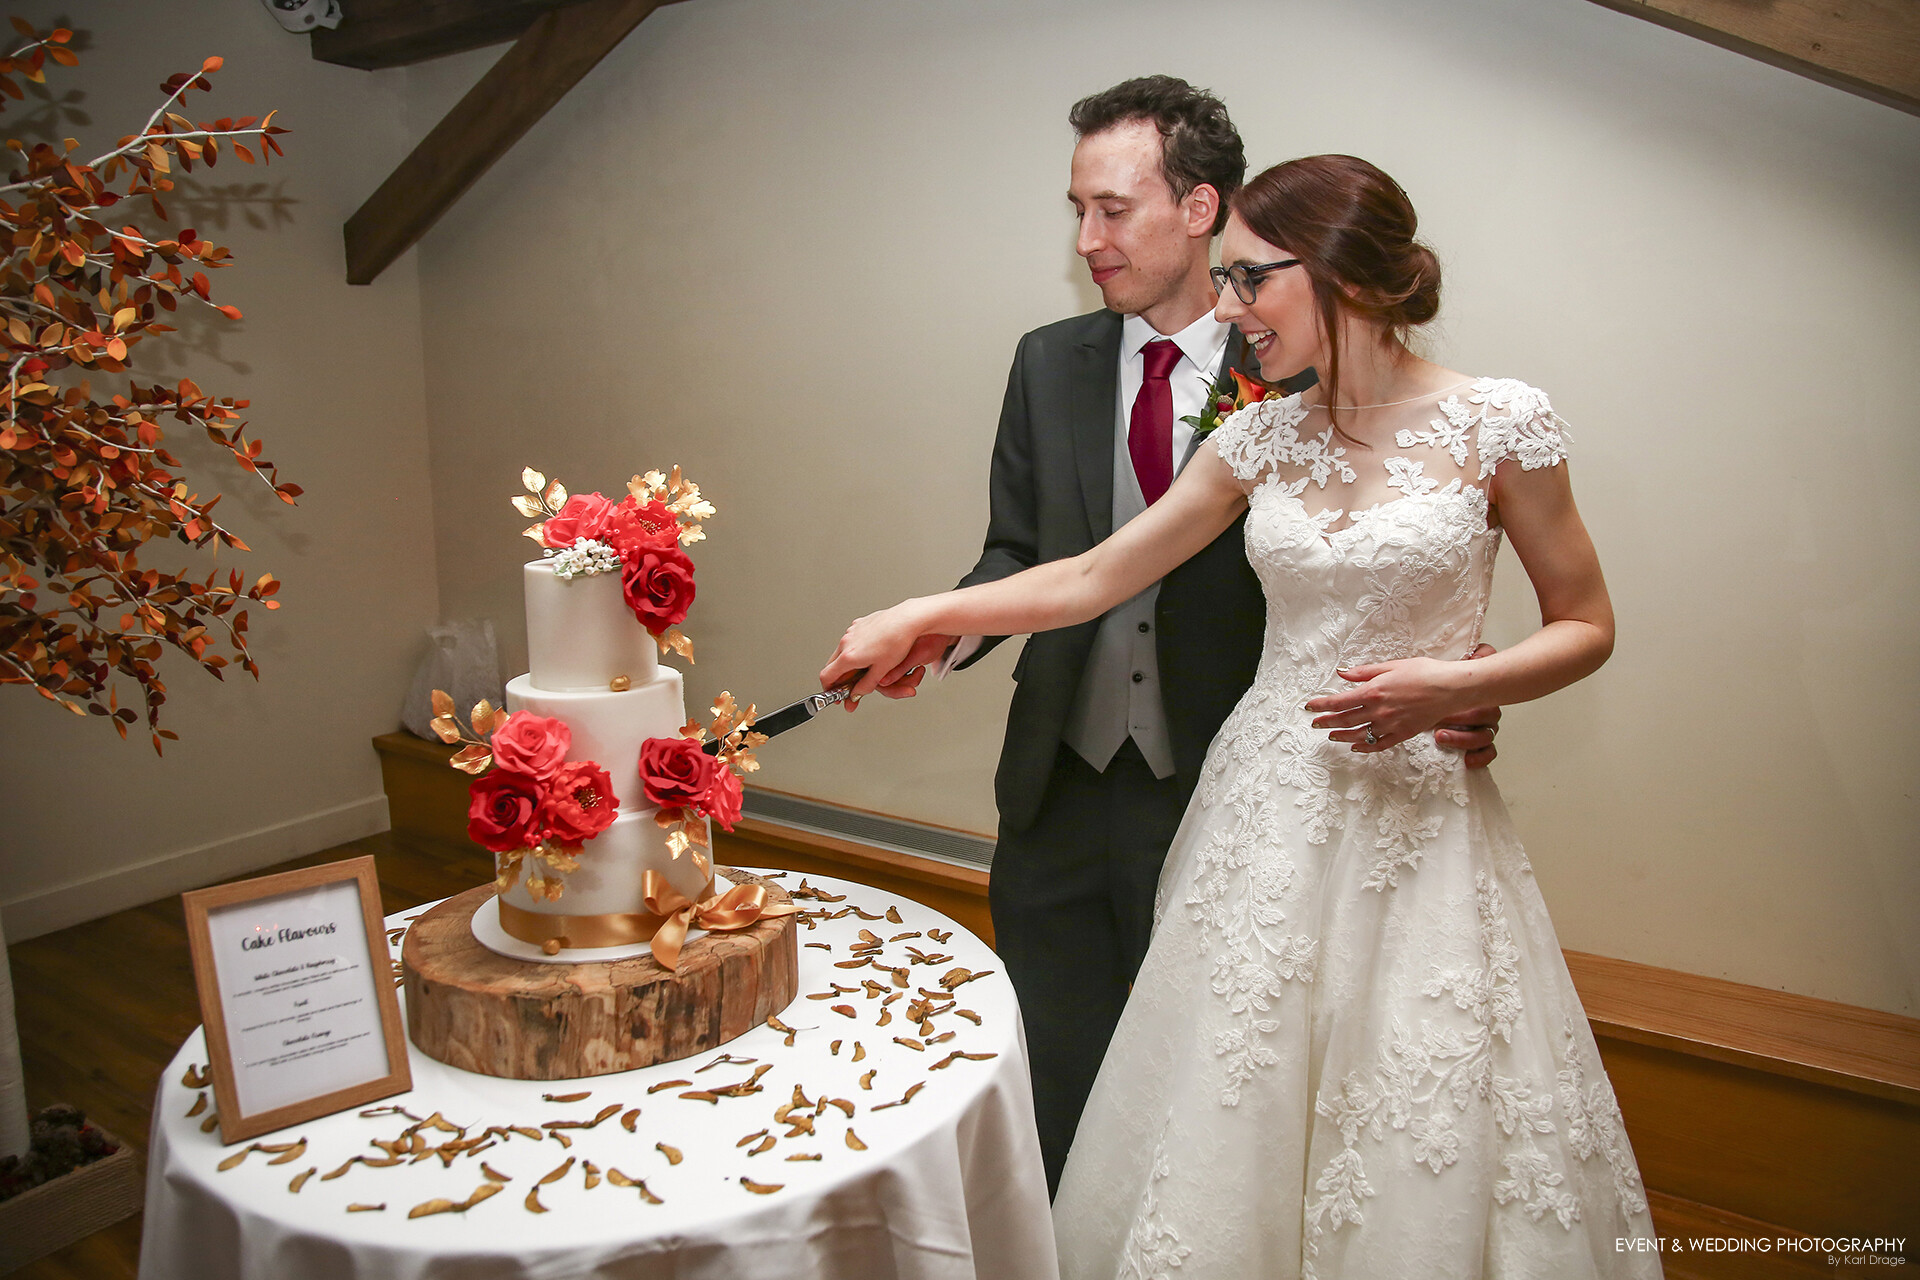 The Bride & Groom cut into their wedding cake